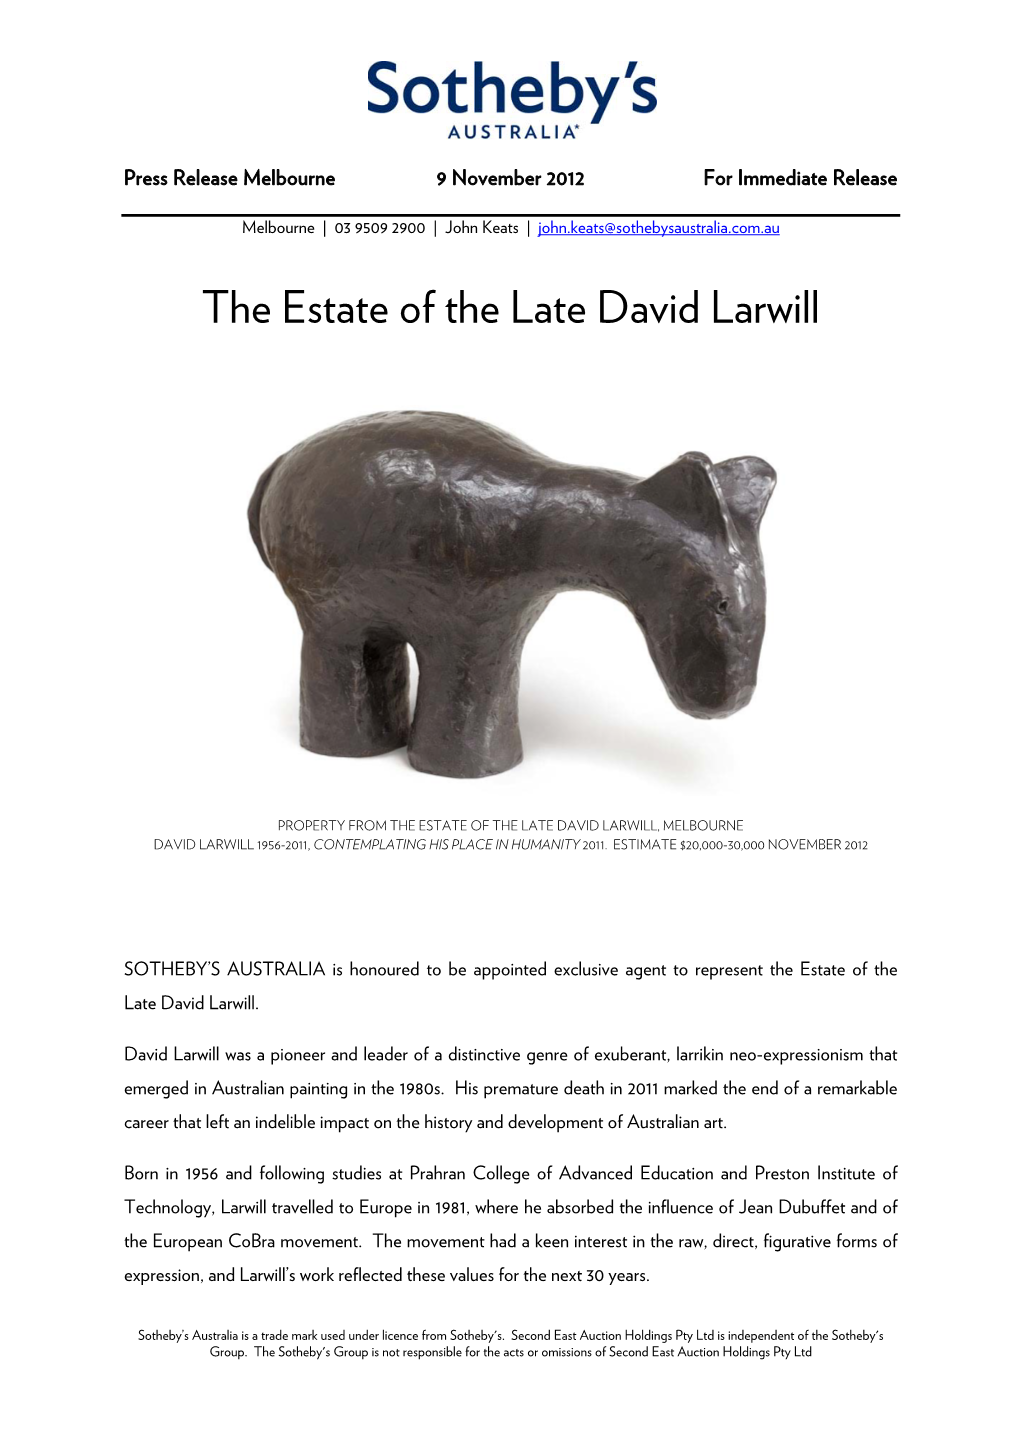 The Estate of the Late David Larwill